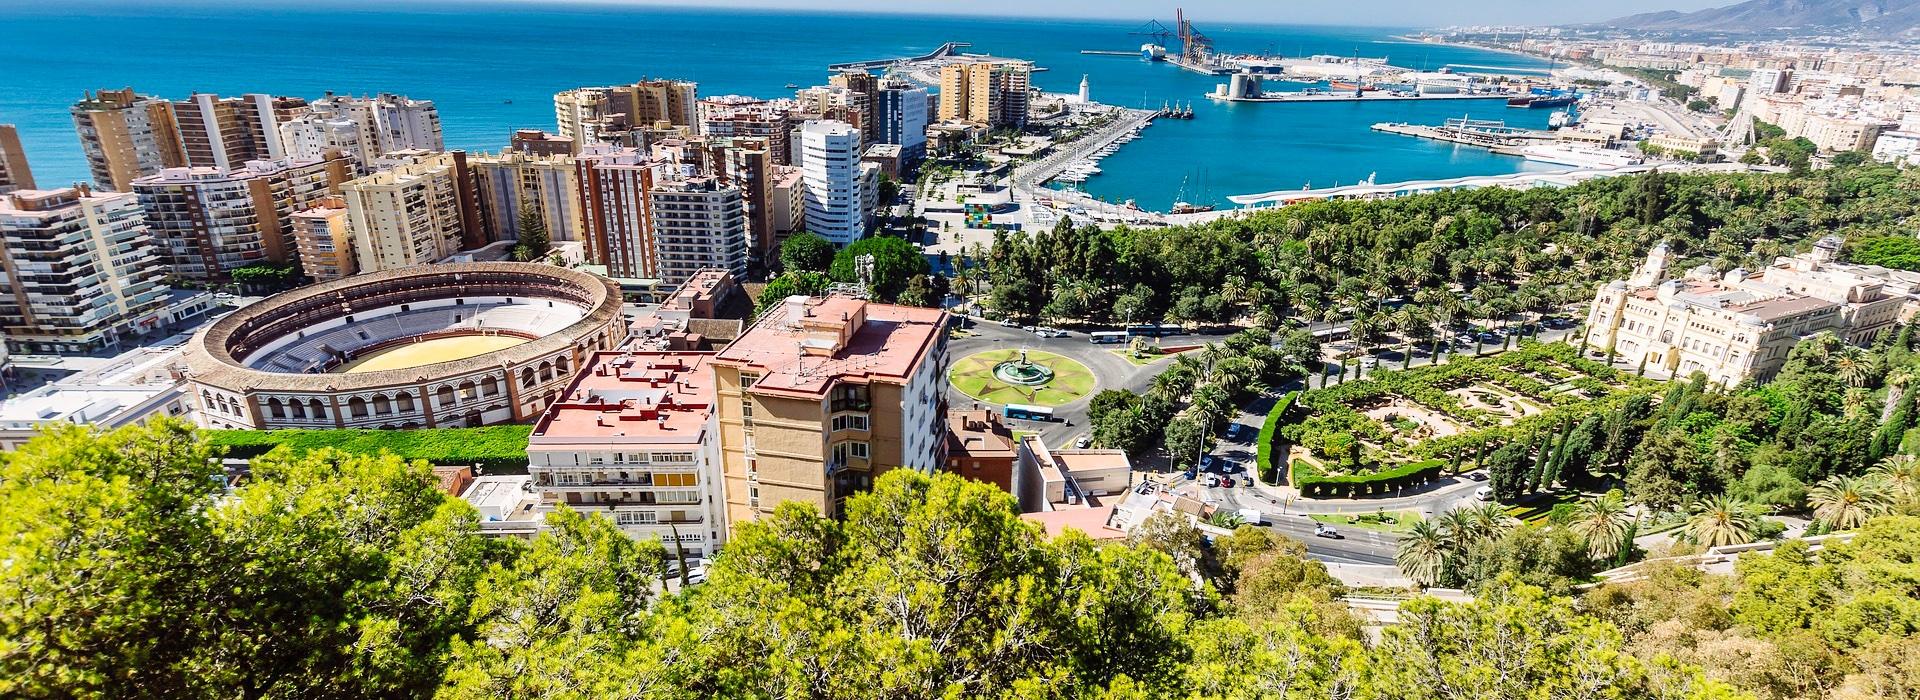 Málaga, Spanisches Festland, Spanien, Europa